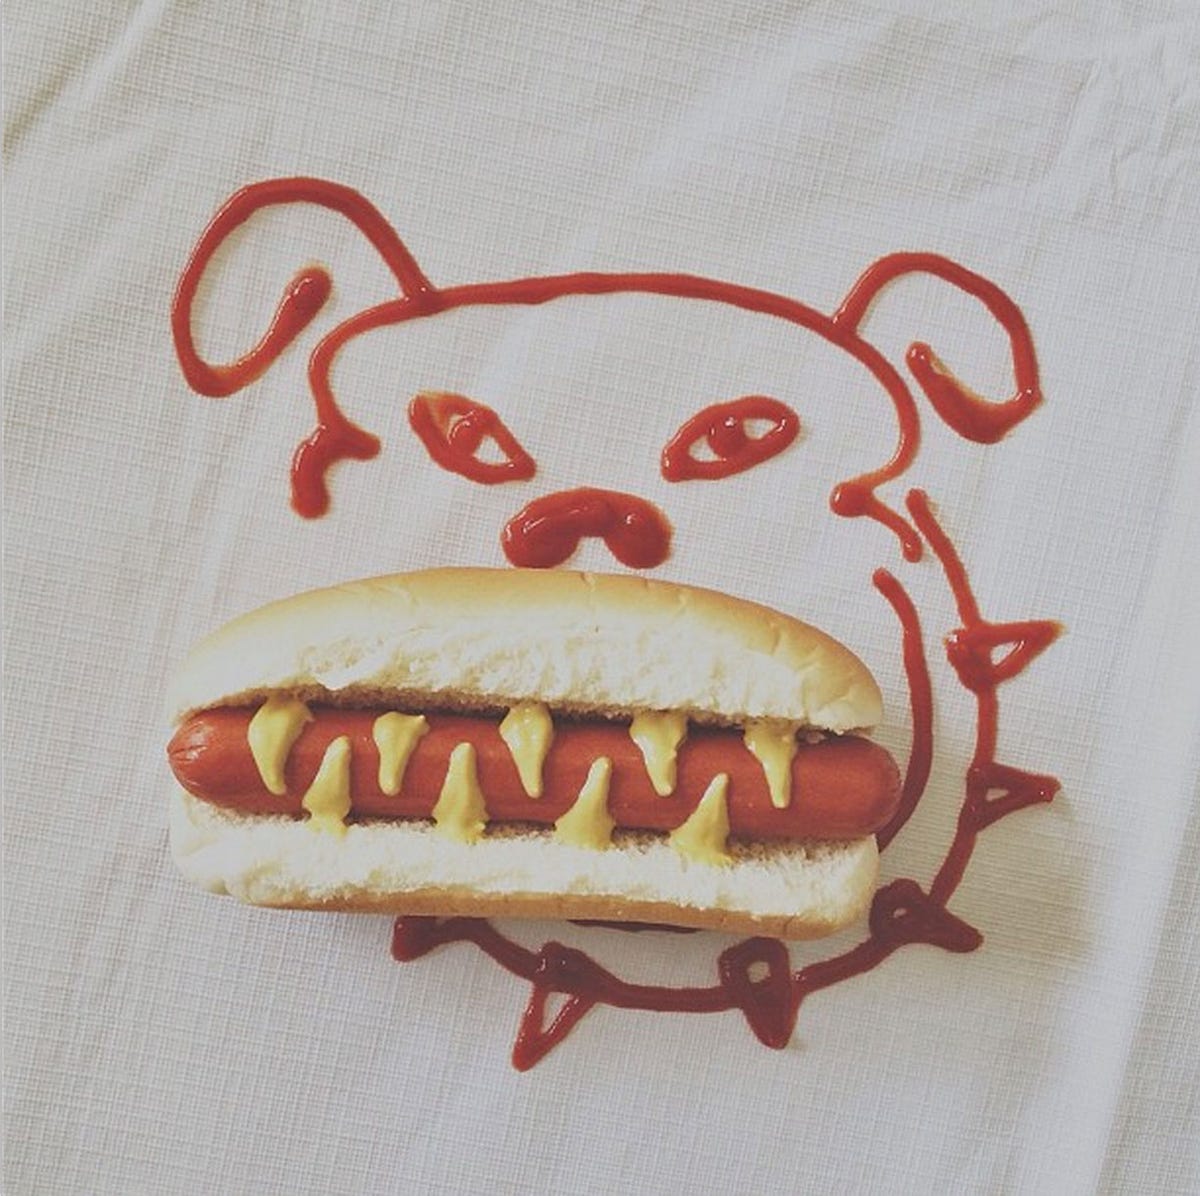 Hot Dog, by Brock Davis